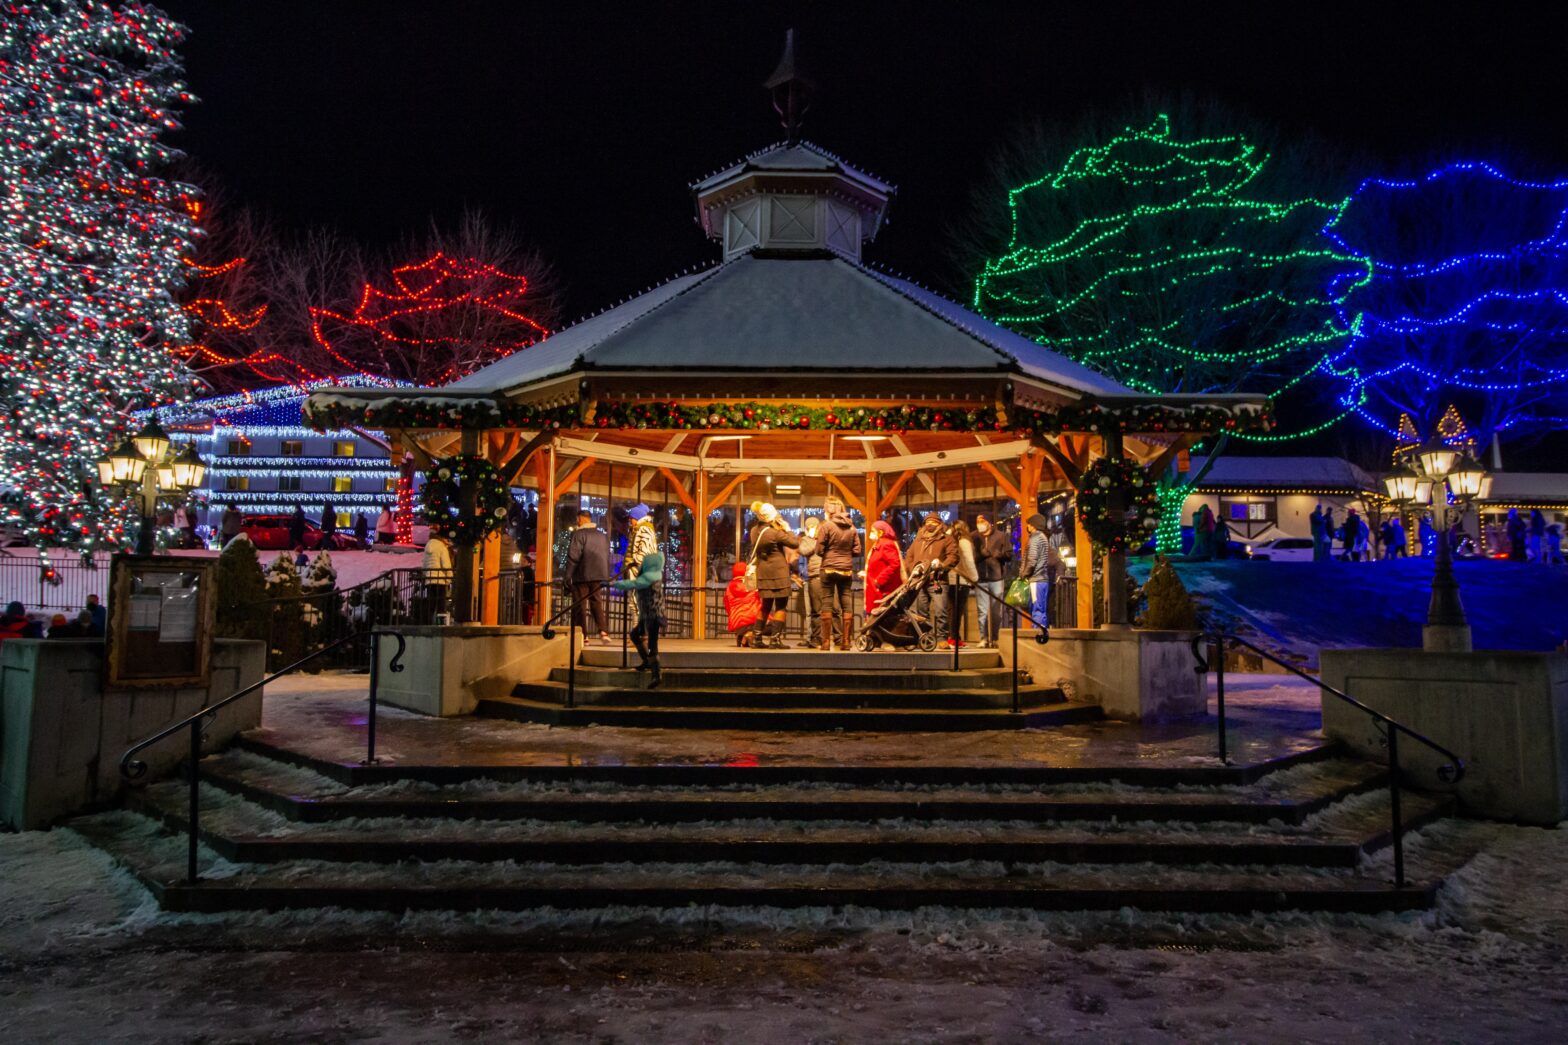 Leavenworth, Washington During Christmas: A Dazzling Holiday Destination